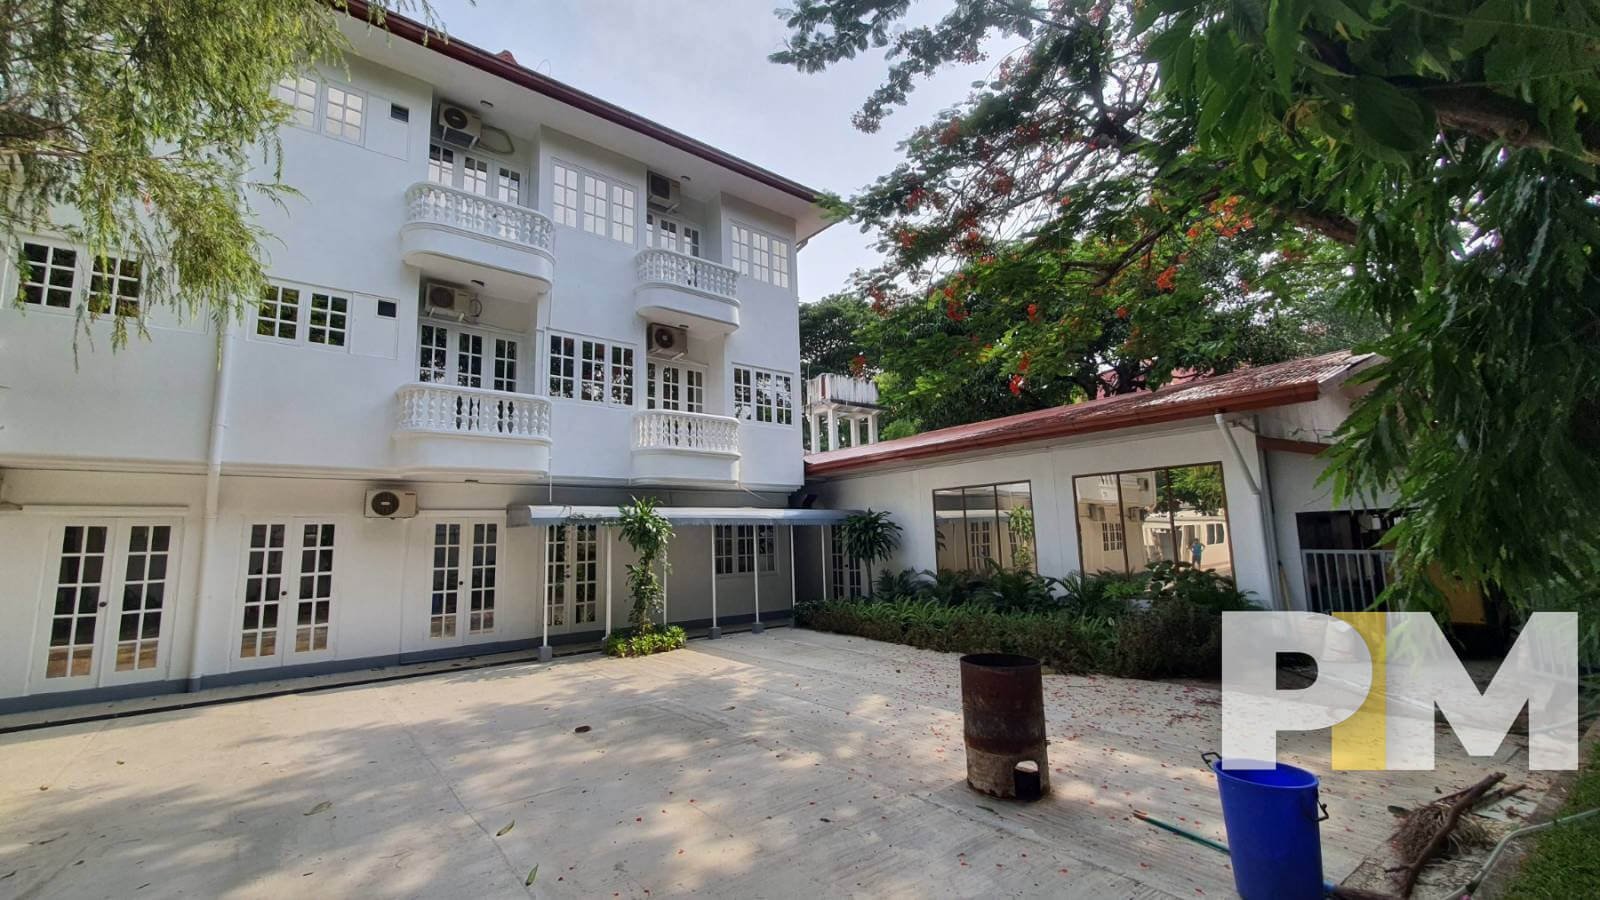 House with balconies - Rent in Myanmar